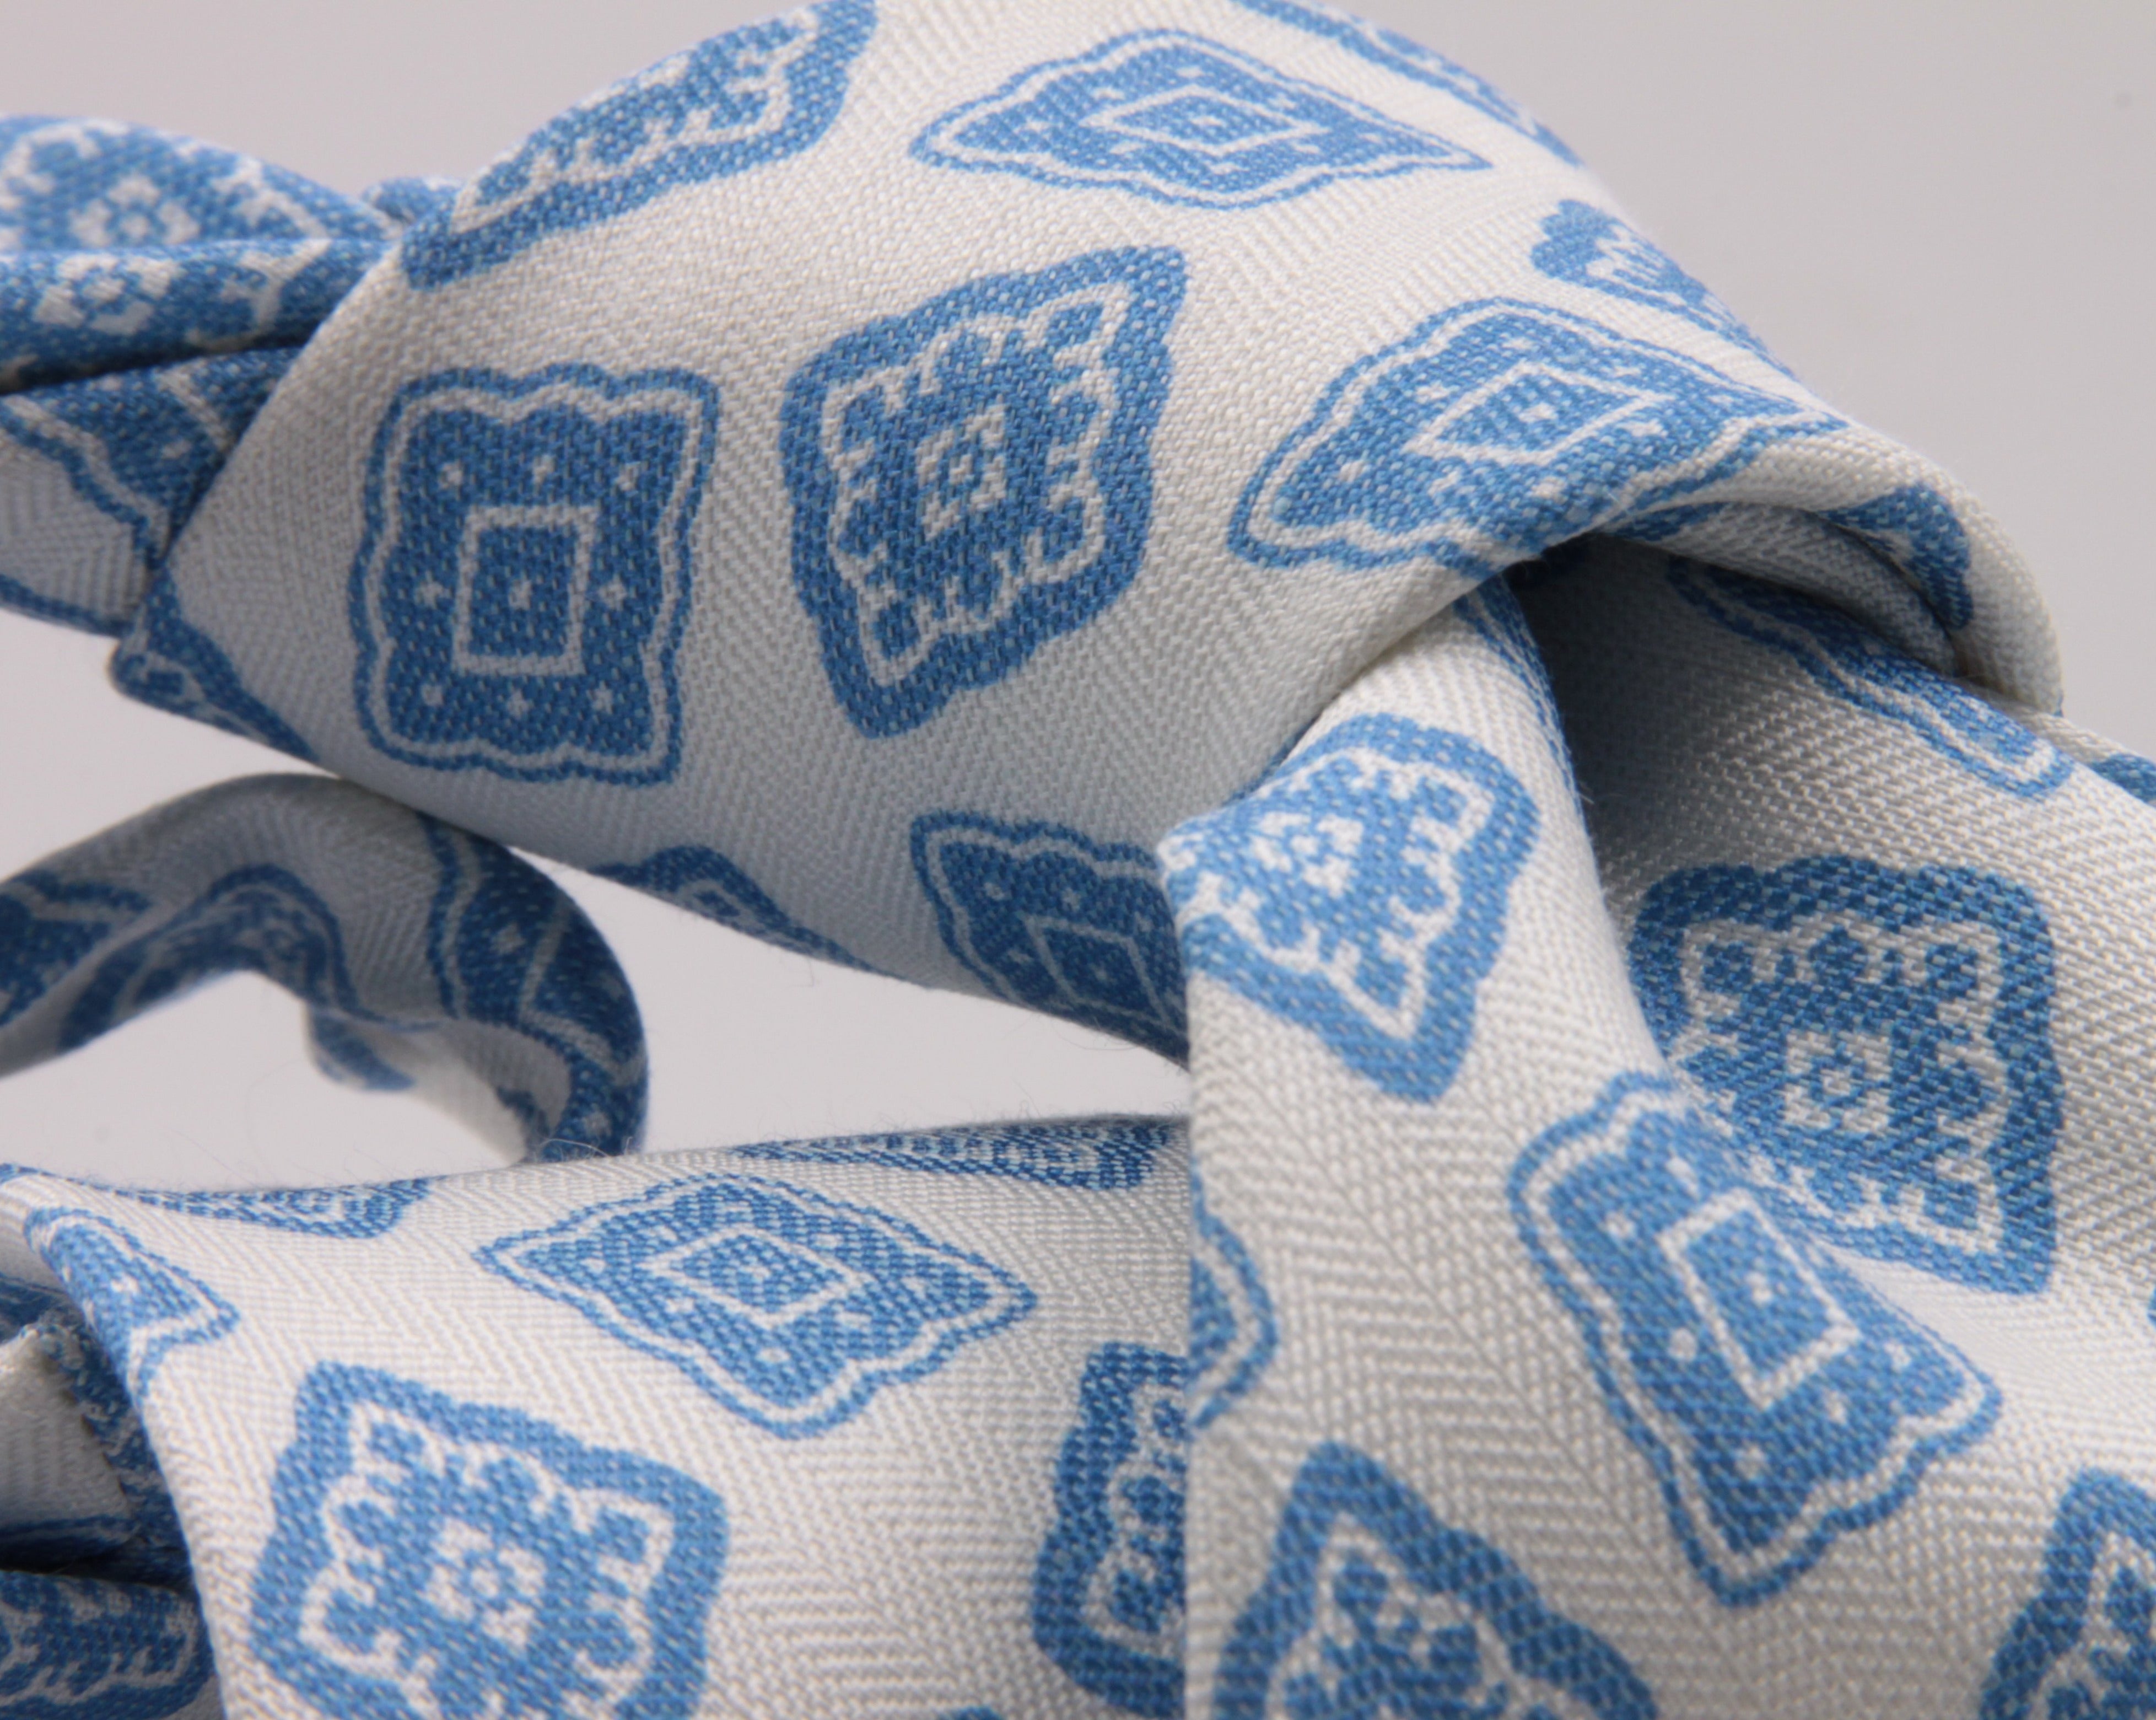 Drake's for Cruciani e Bella Printed 60% Silk 40% Linen Self-Tipped White and Light Blue Medallion Tie Handmade in London, England 8 cm x 149 cm #5426